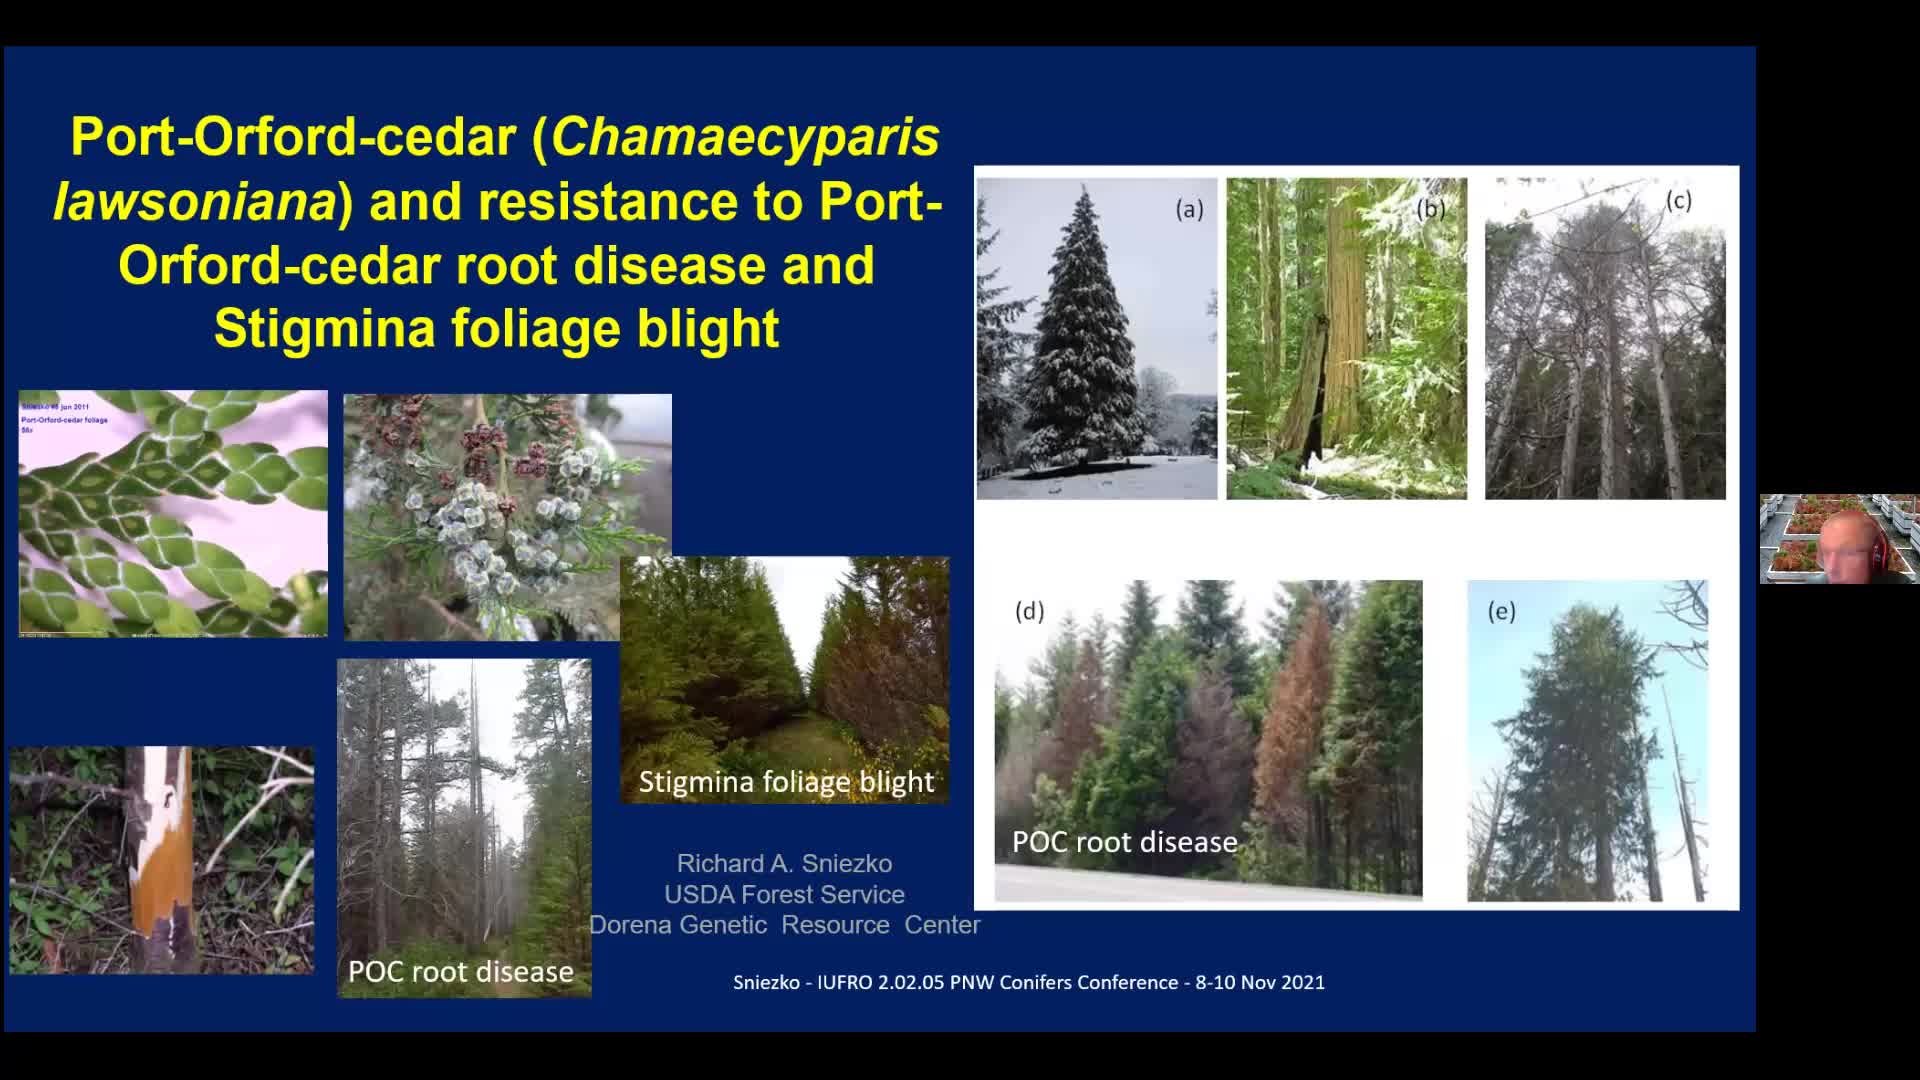 Port-Oford-cedar (Chamaecyparis lawsoniana) and resistance to Port-Orford-cedar root disease and Stigmina foliage blight - Richard Sniezko